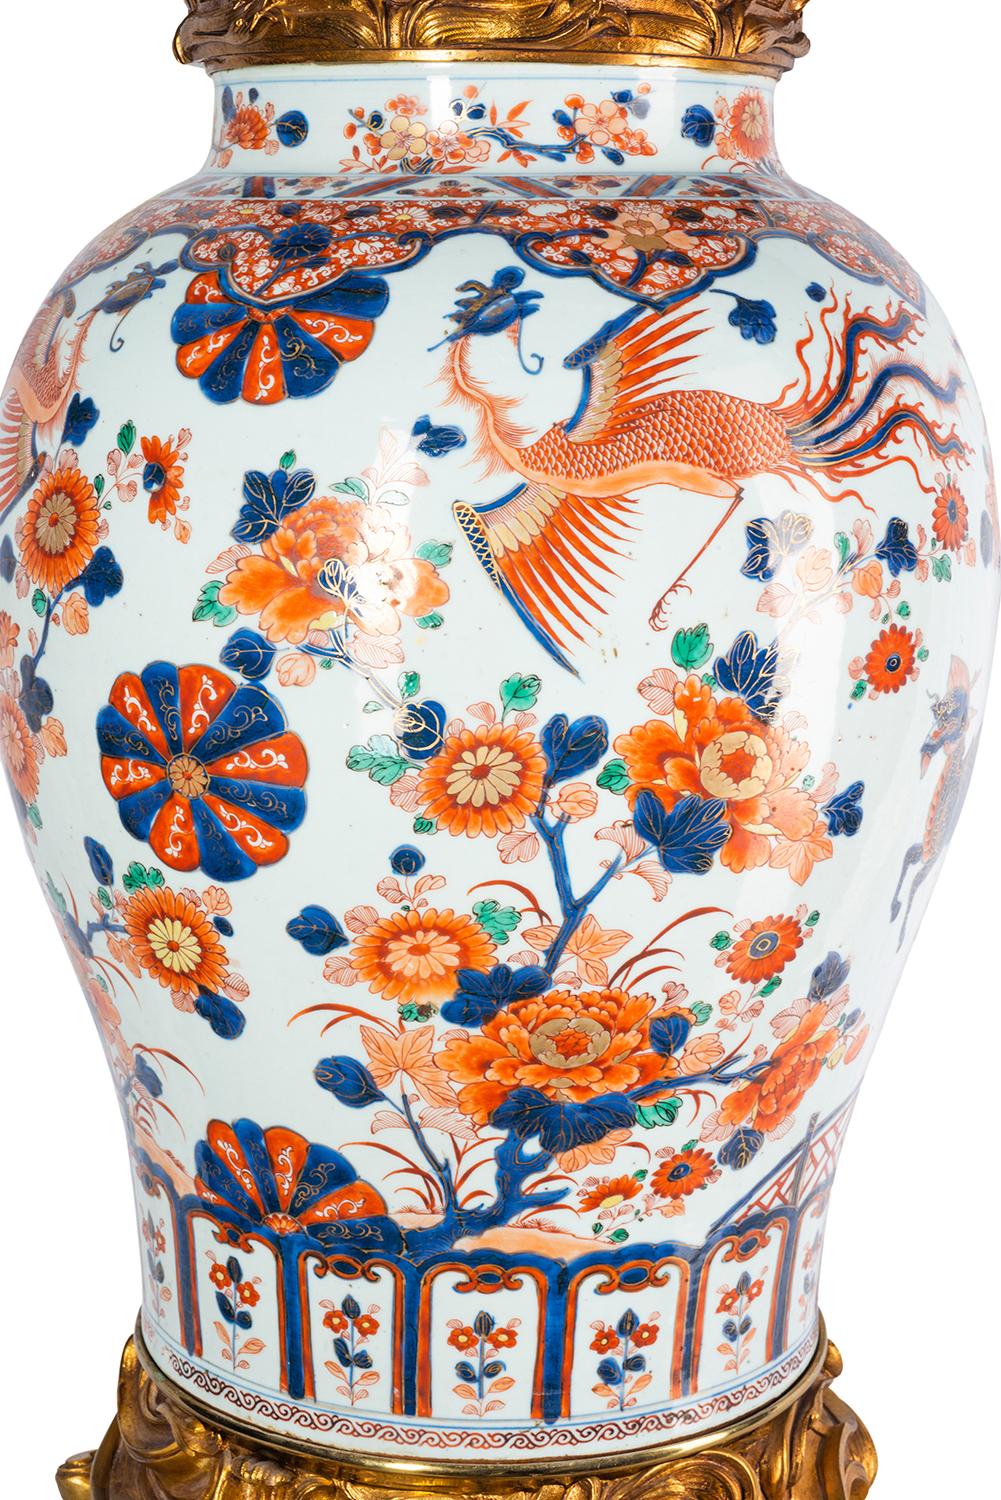 18th Century Chinese Lidded Imari Vase, Ormolu Mounted For Sale 1